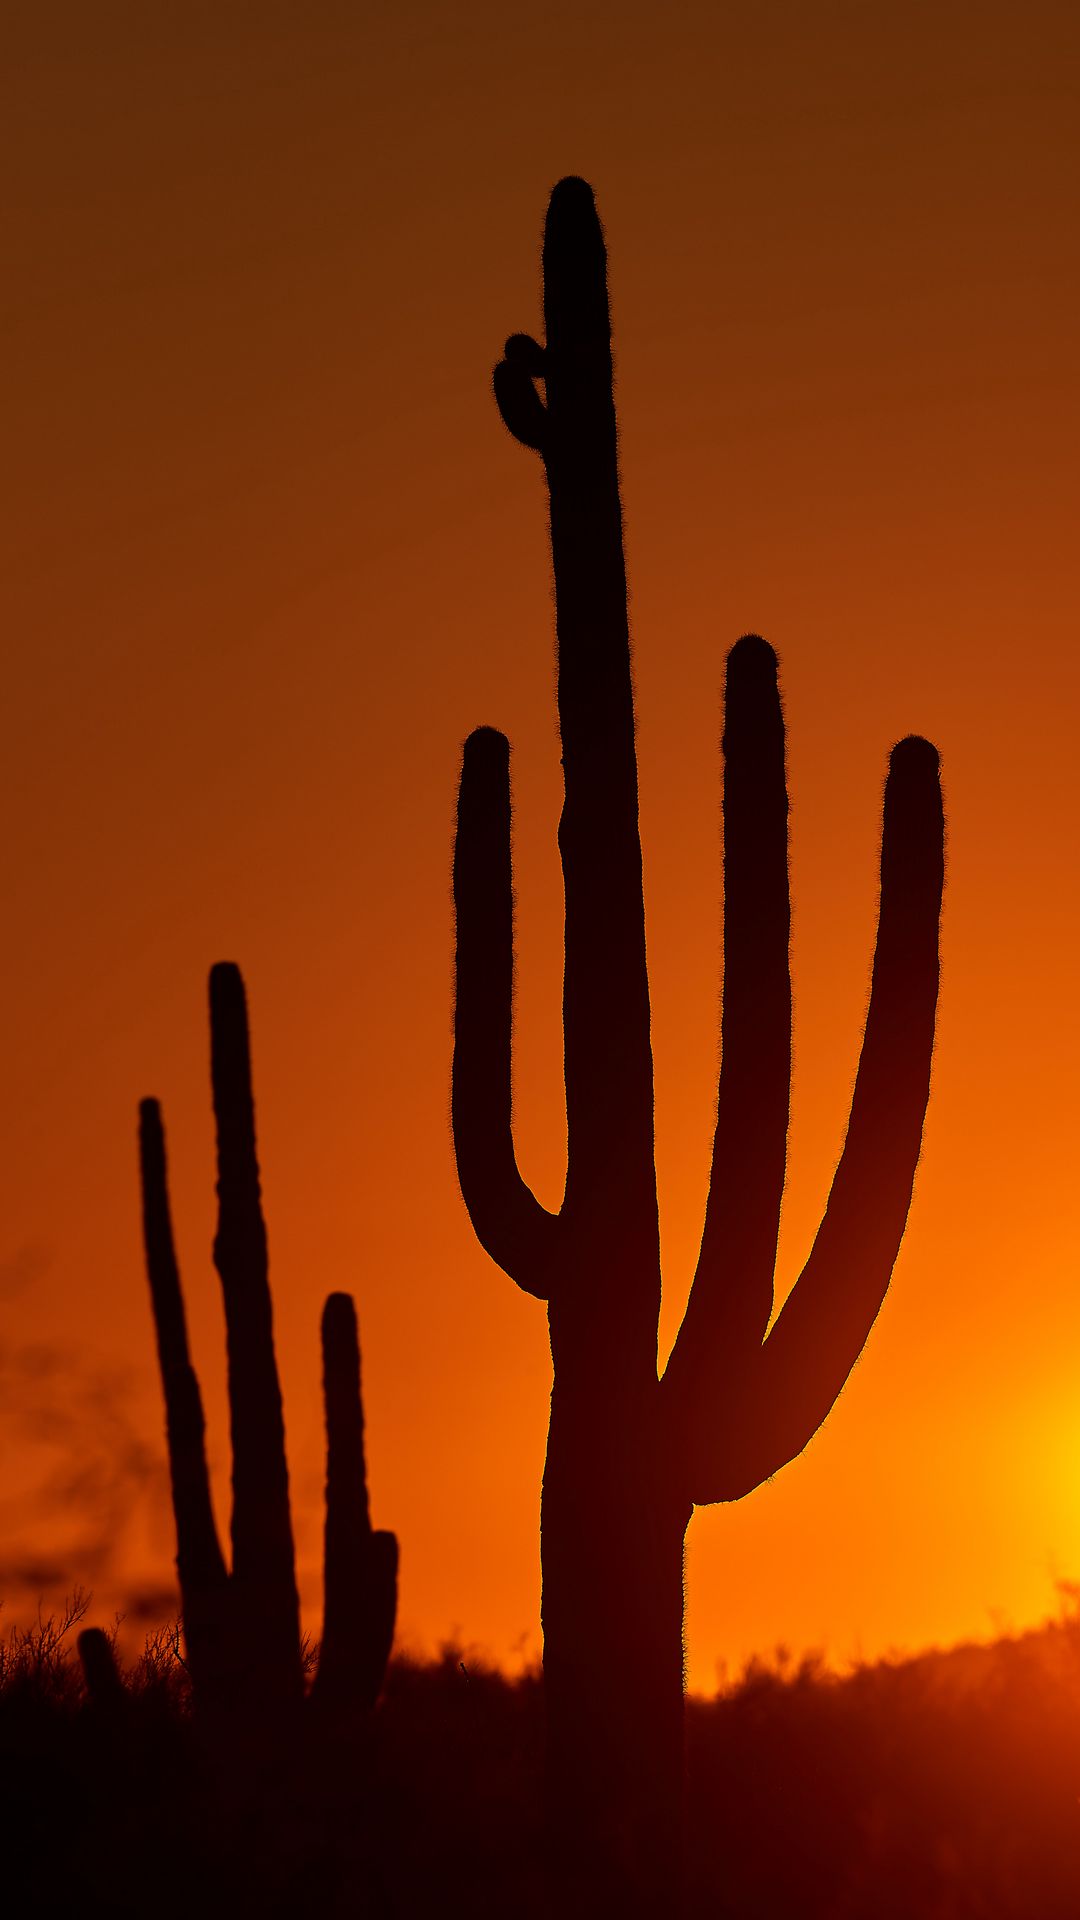 Download wallpaper 1080x1920 cacti, sunset, dusk, dark samsung galaxy ...